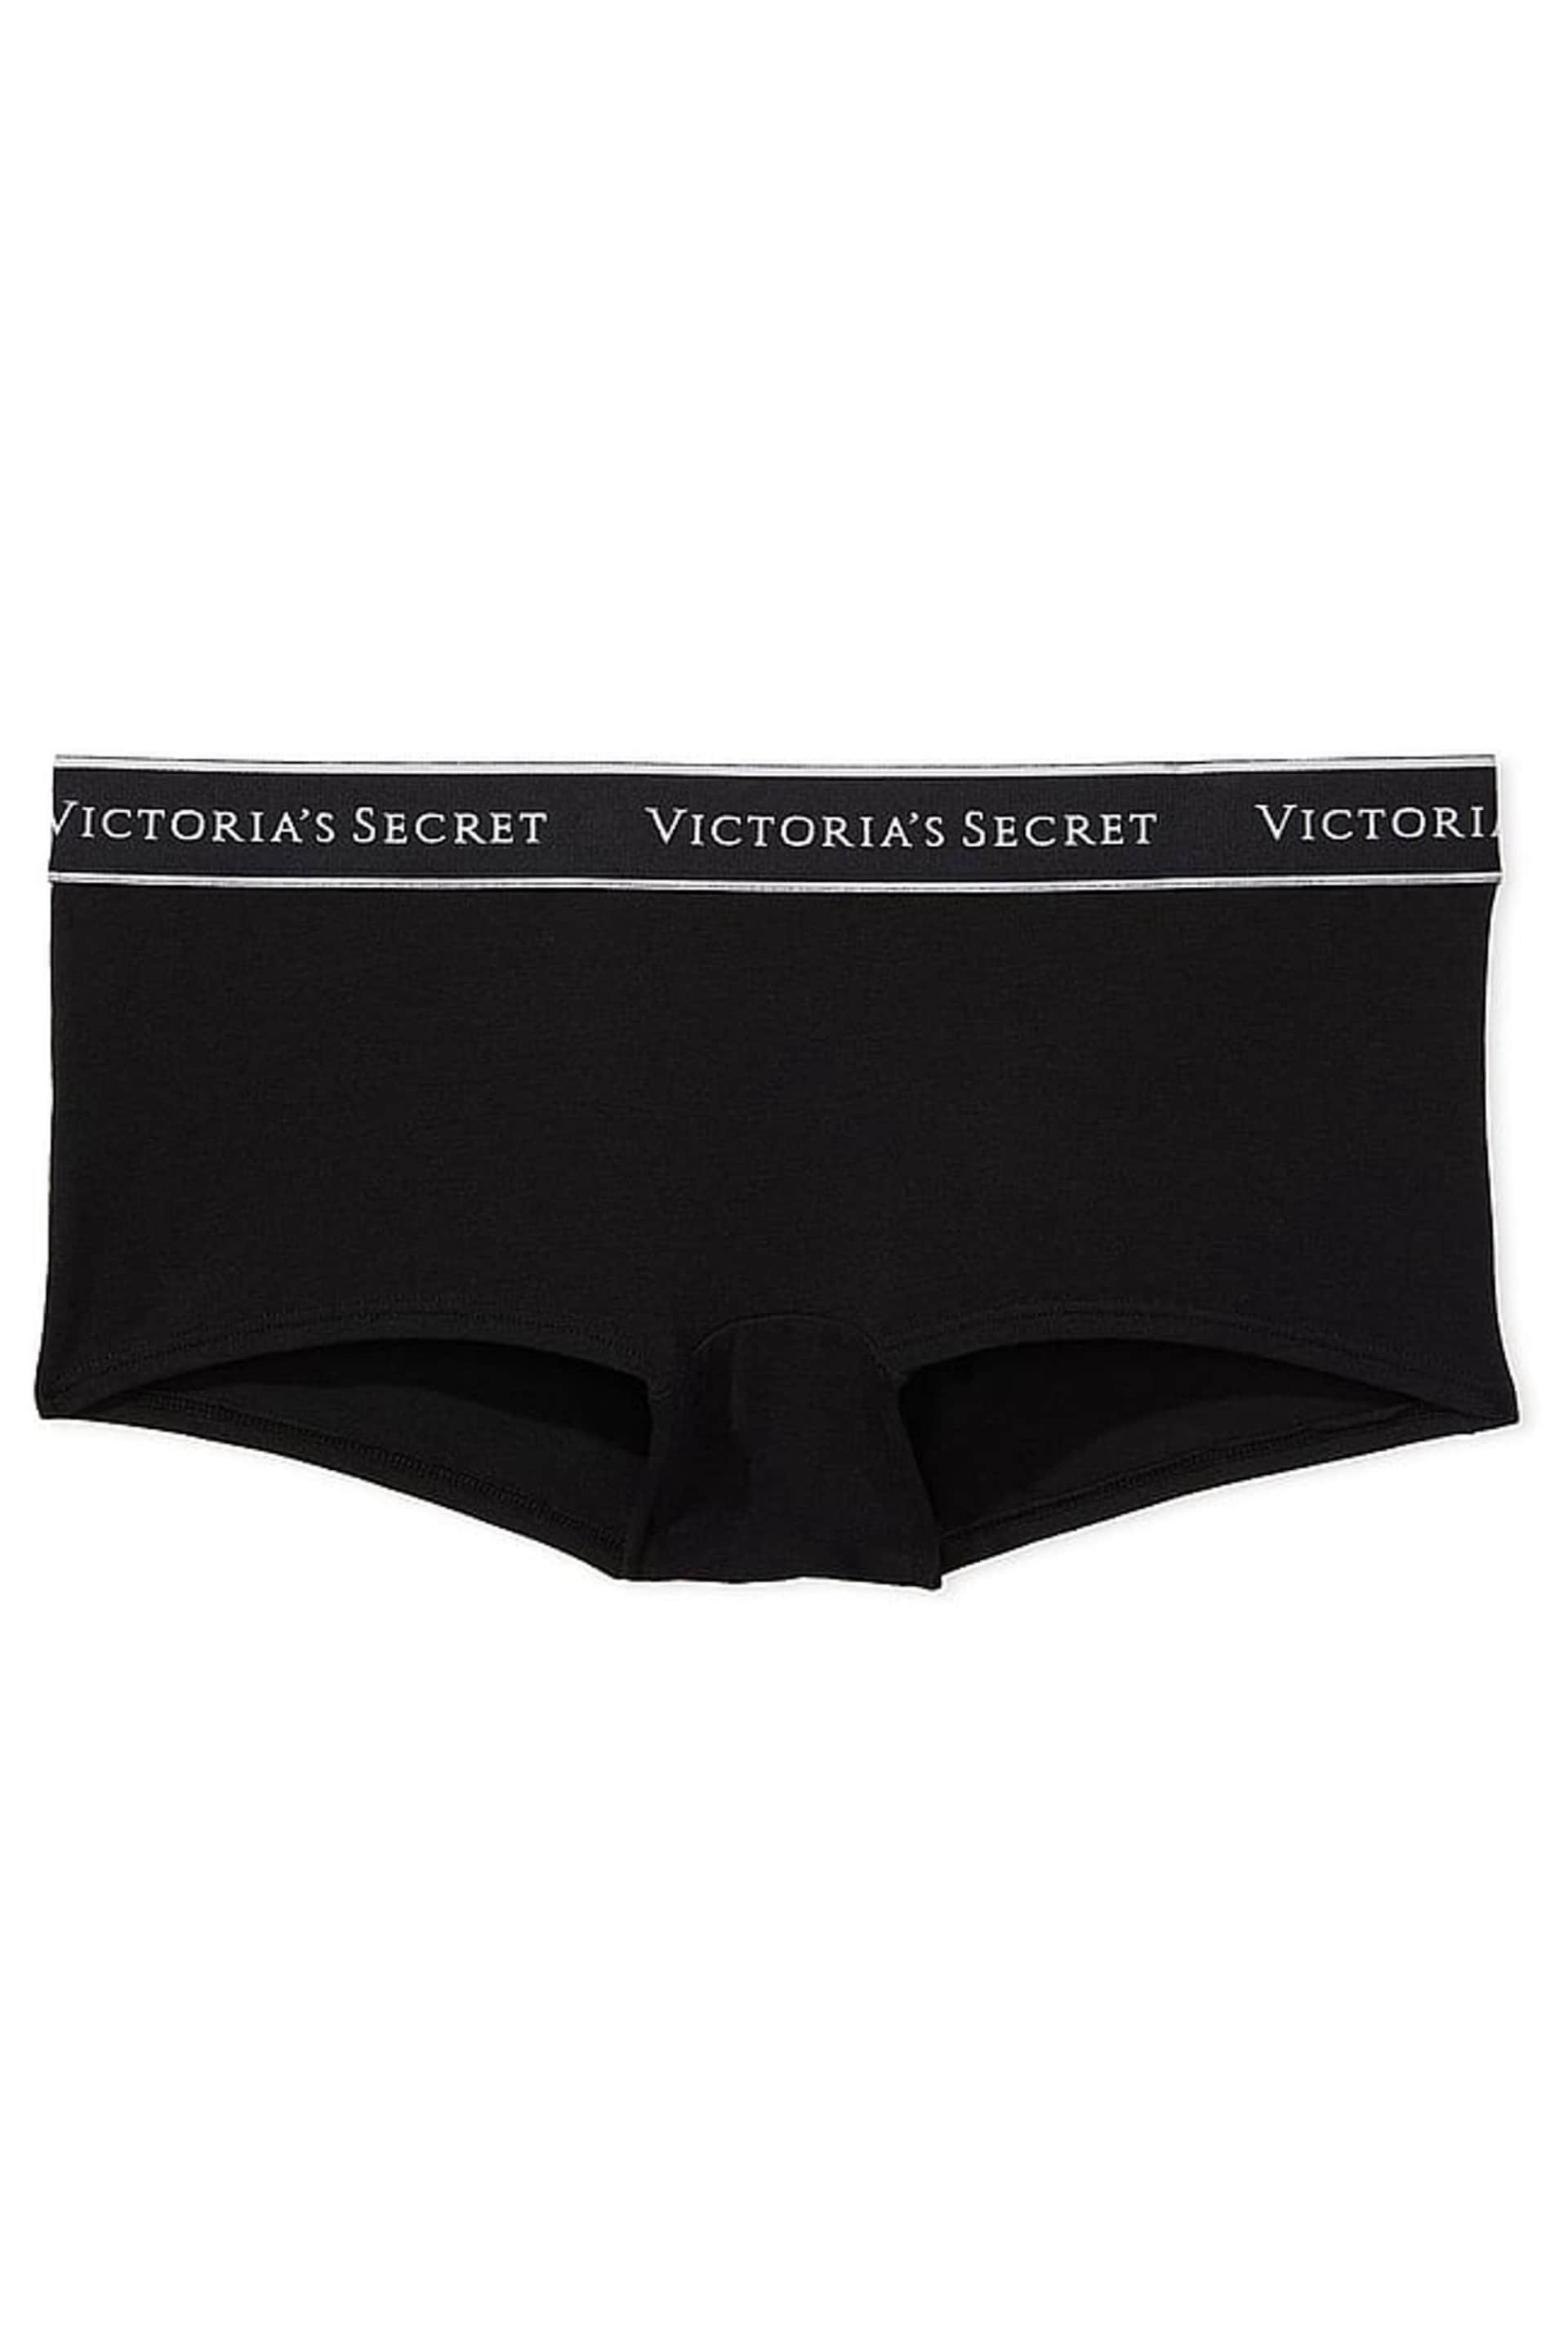 Victoria's Secret Black Short Logo Knickers - Image 3 of 3